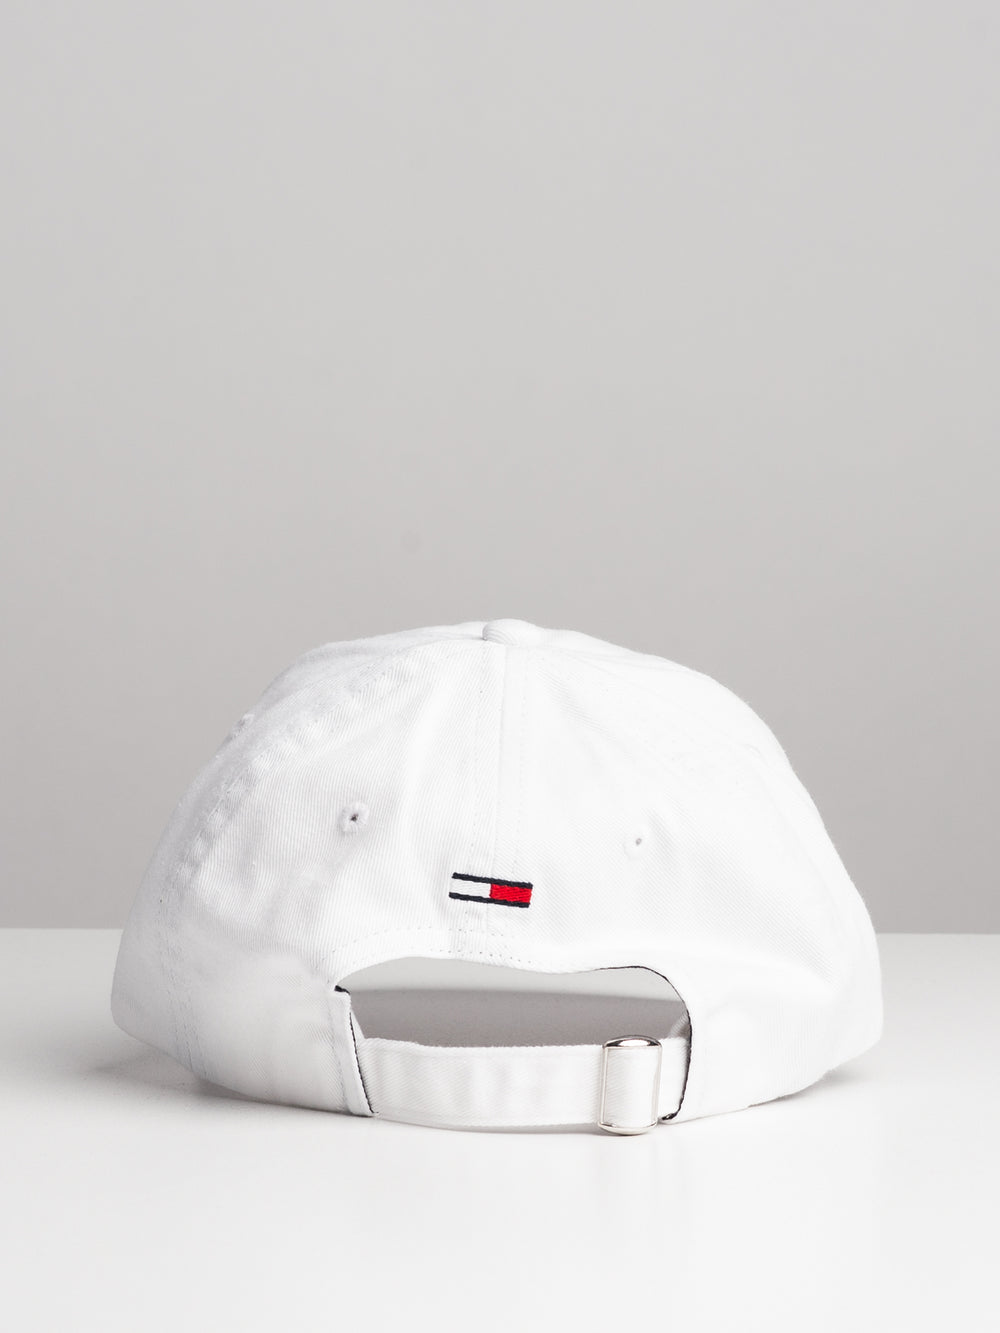 SPORT CAP - WHITE - CLEARANCE